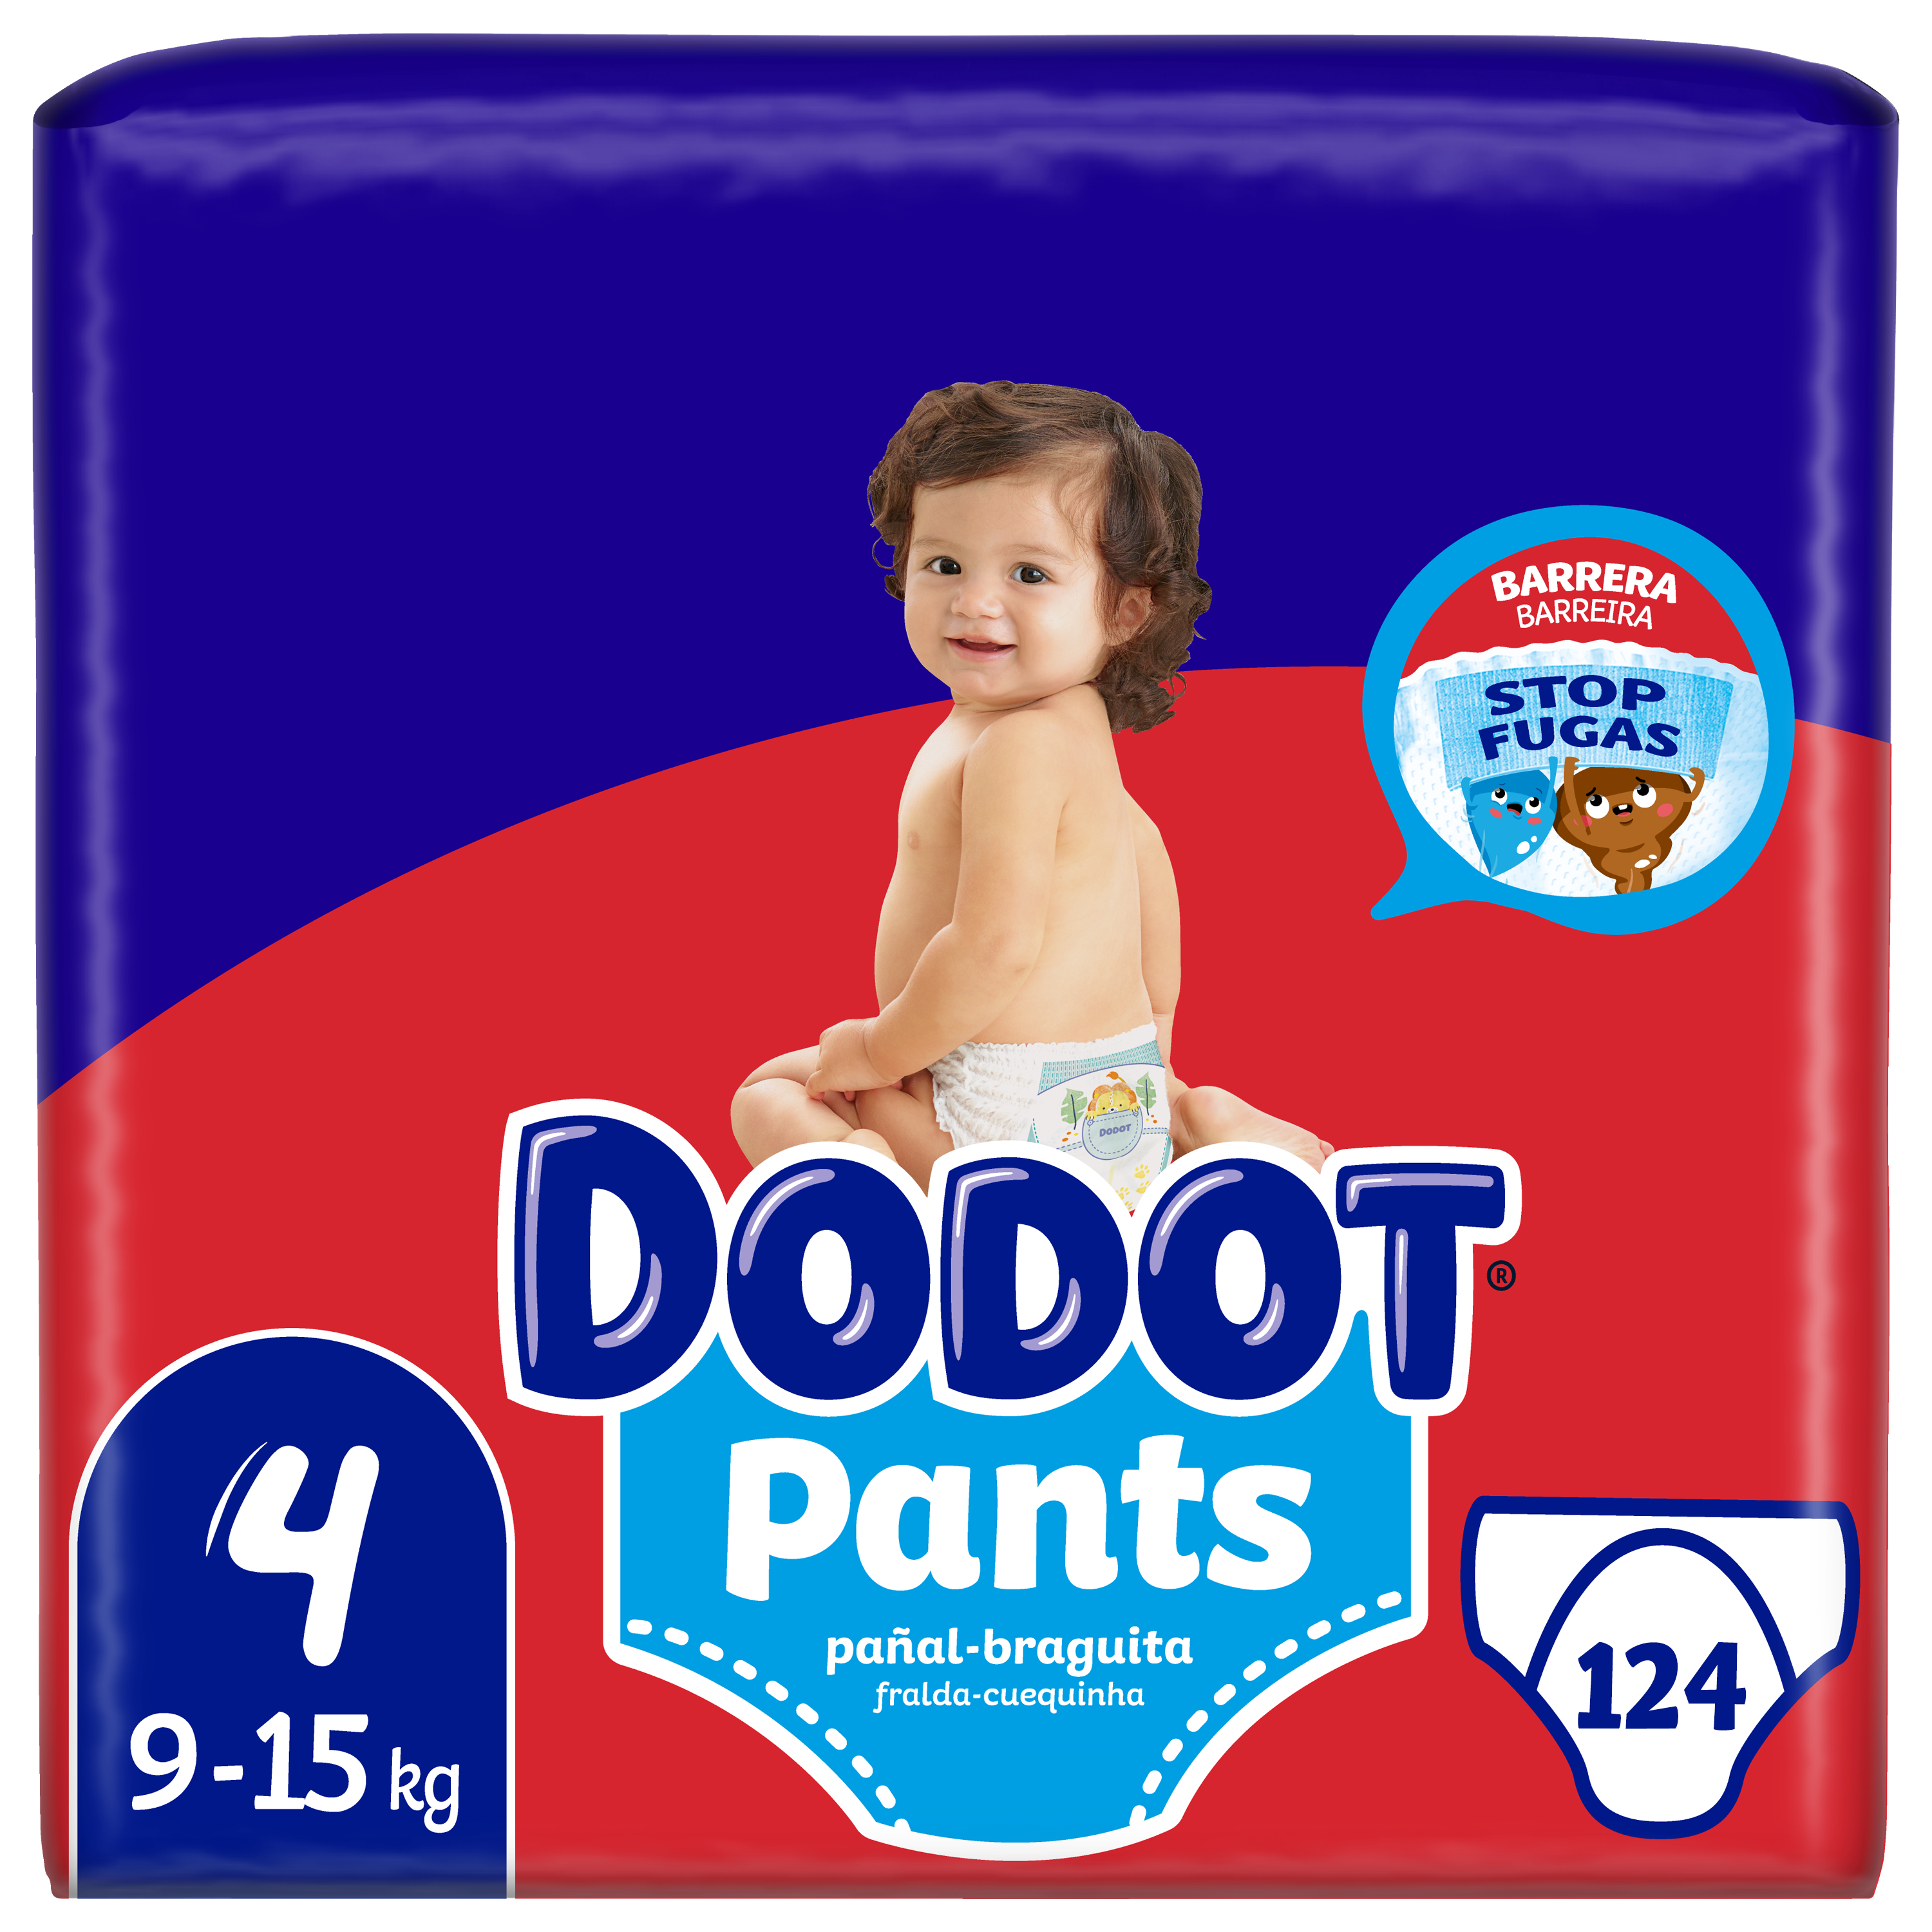 Dodot - Dodot Pants Pañal Braguita Jumbo Pack tallas, 4,5,6. Pack Ahorro